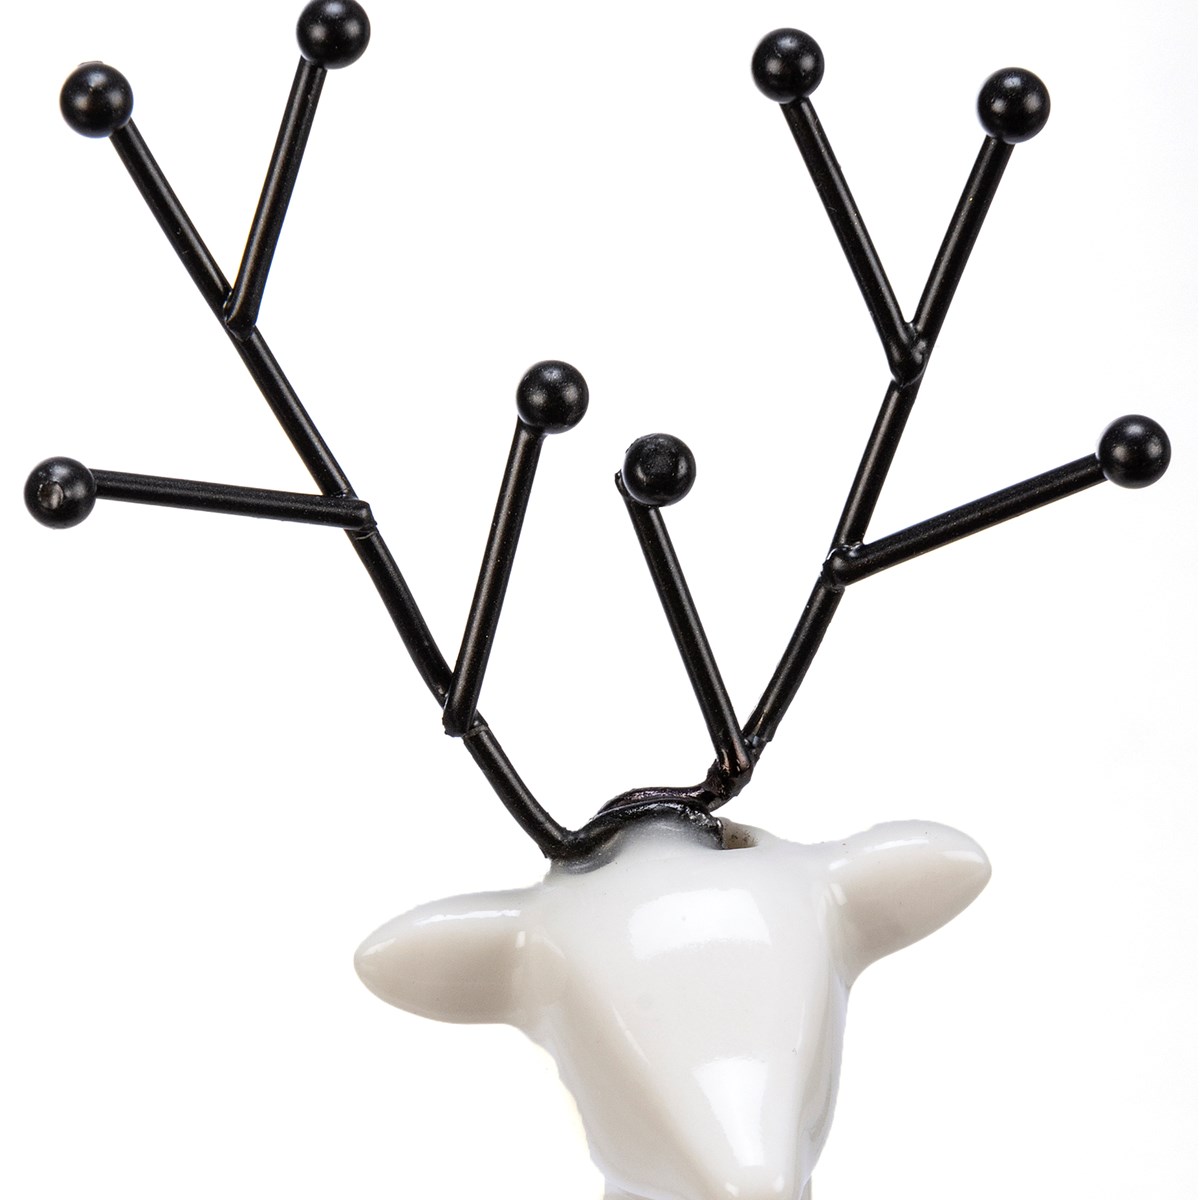 Black & White Deer Figurine Set - Ceramic, Metal